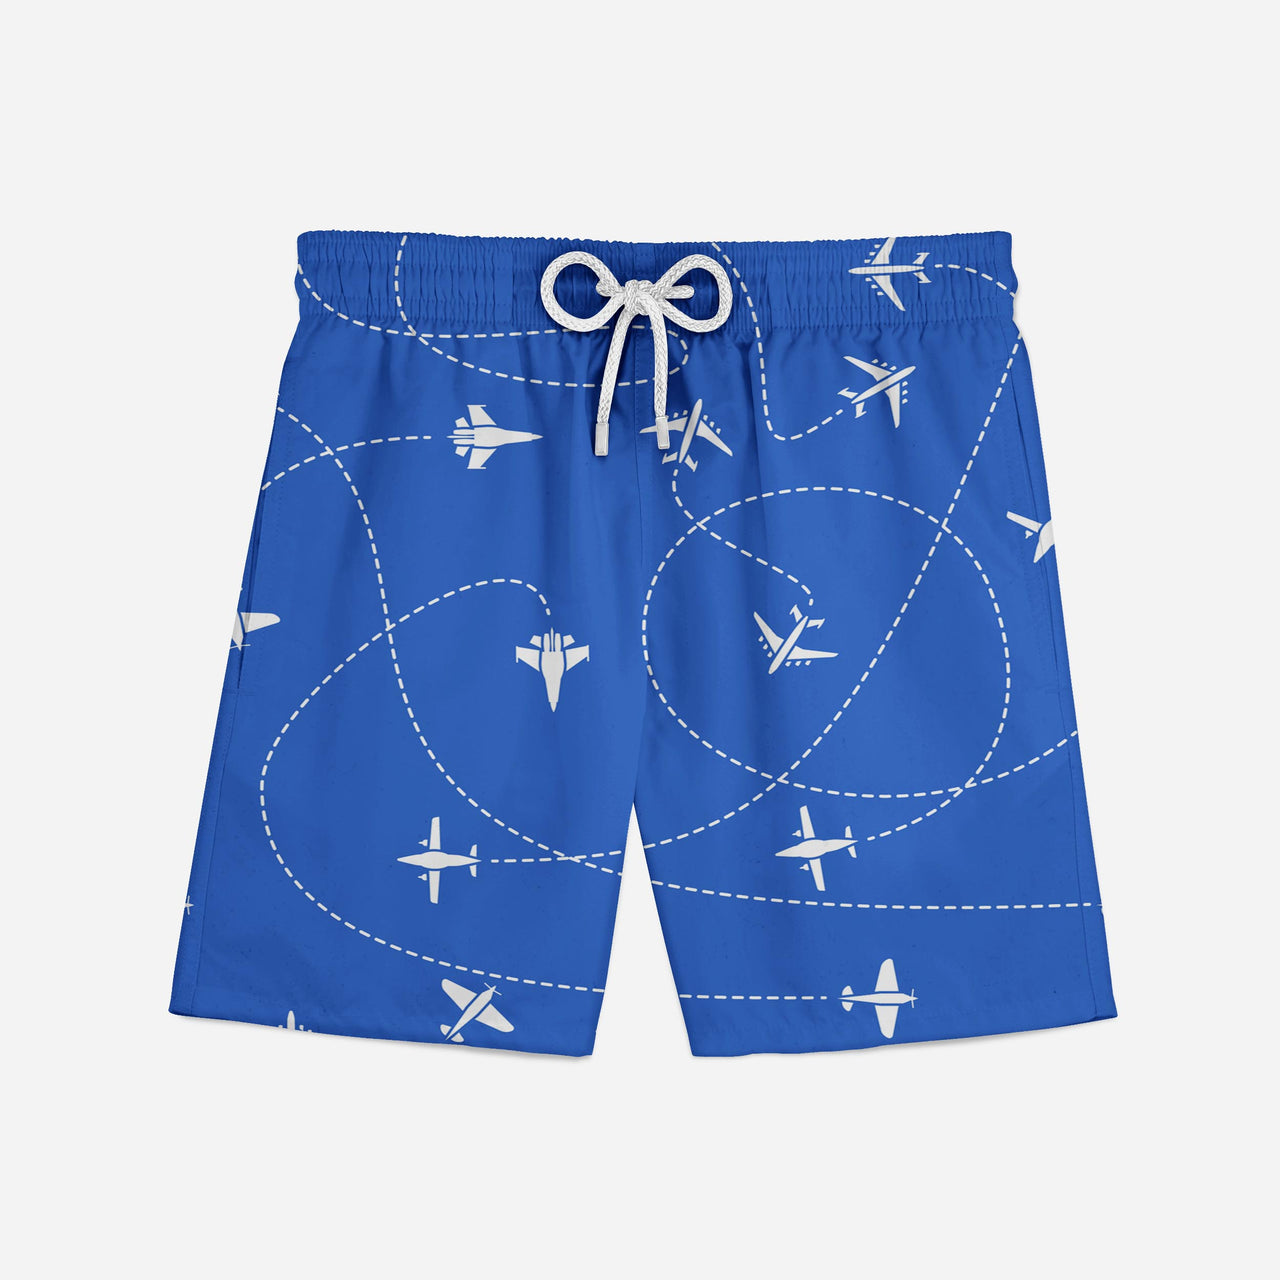 Travel The World By Plane (Blue) Designed Swim Trunks & Shorts